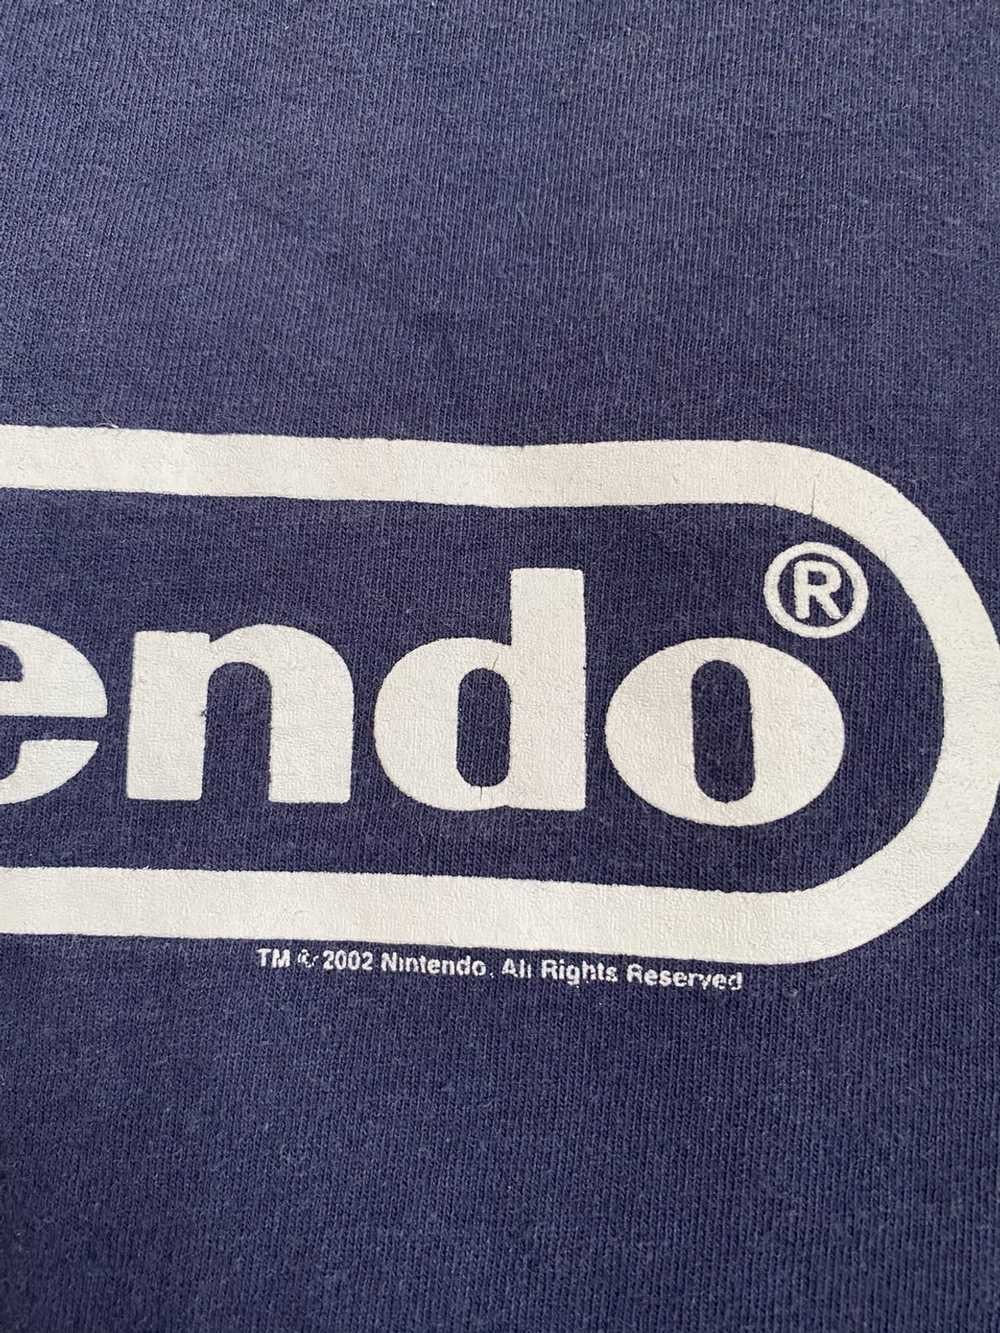 Nintendo × Vintage Vintage 2002 Nintendo Logo Tee - image 4